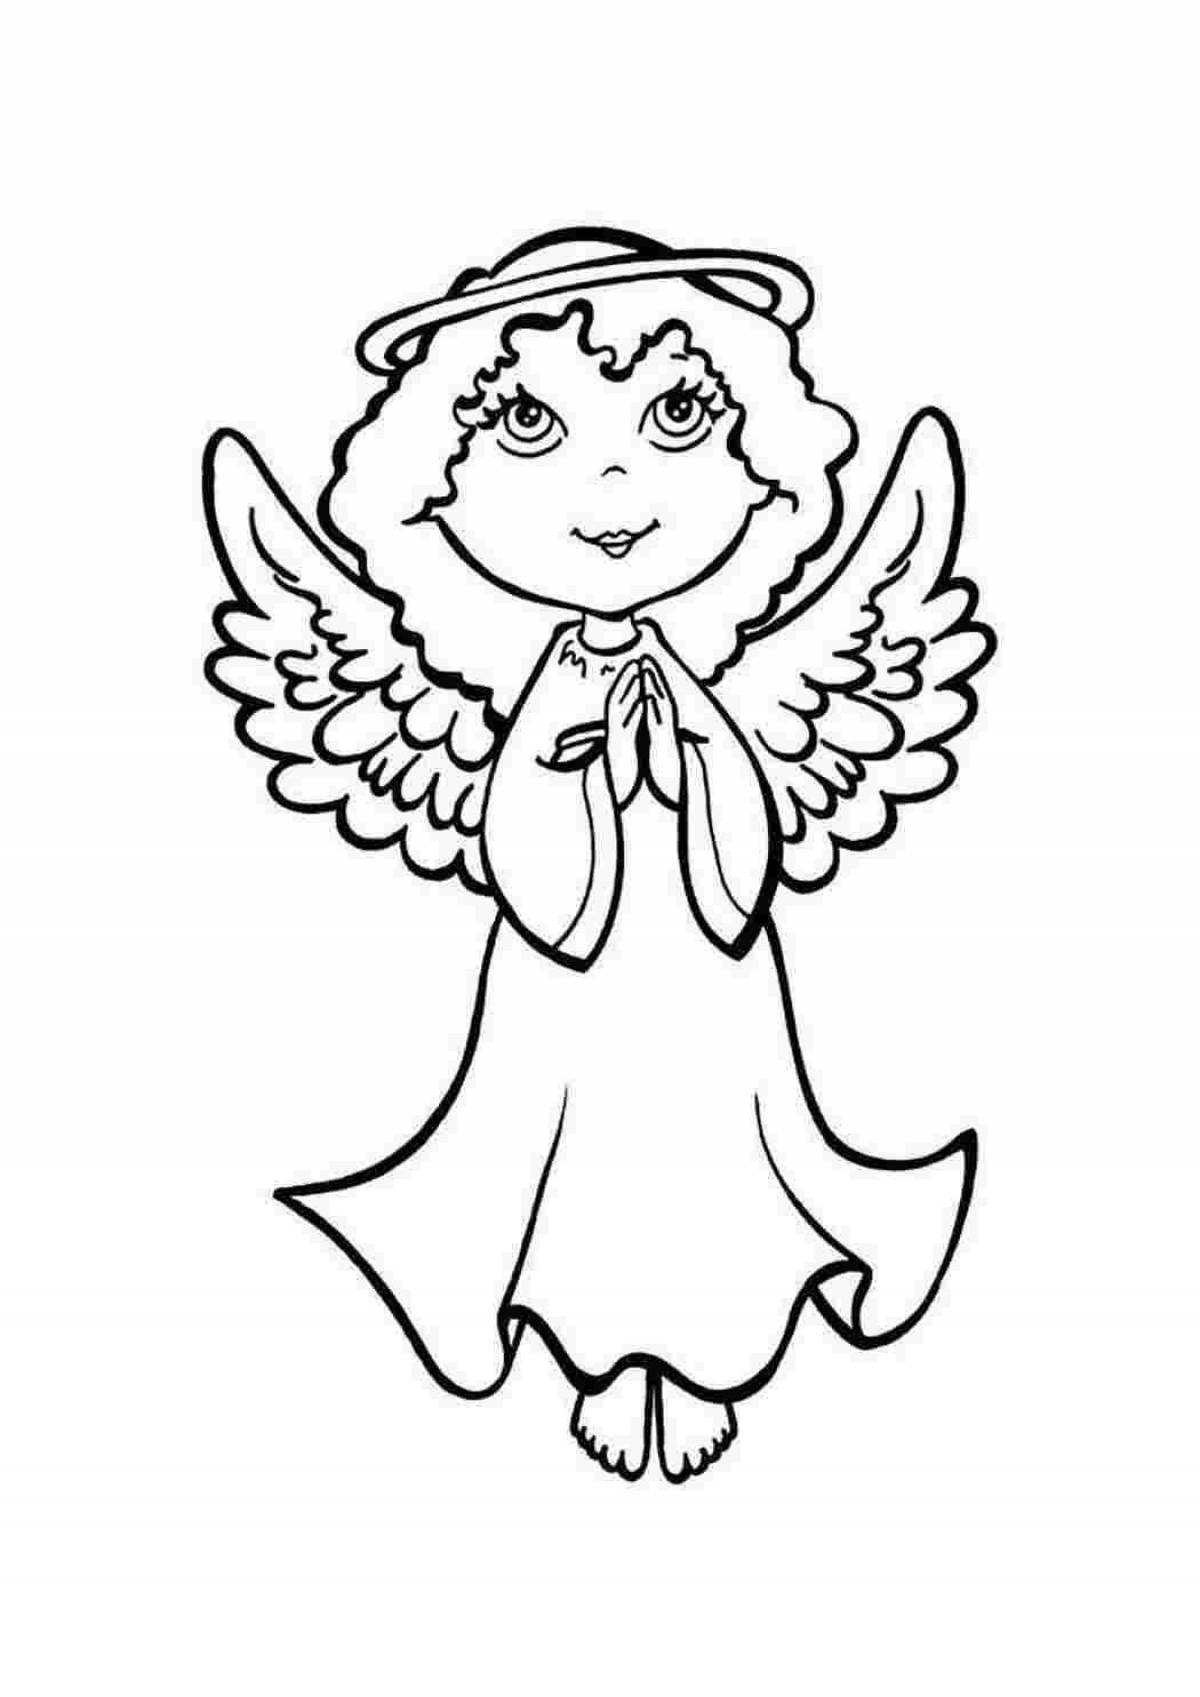 Изысканная раскраска ангел для детей 3-4 лет